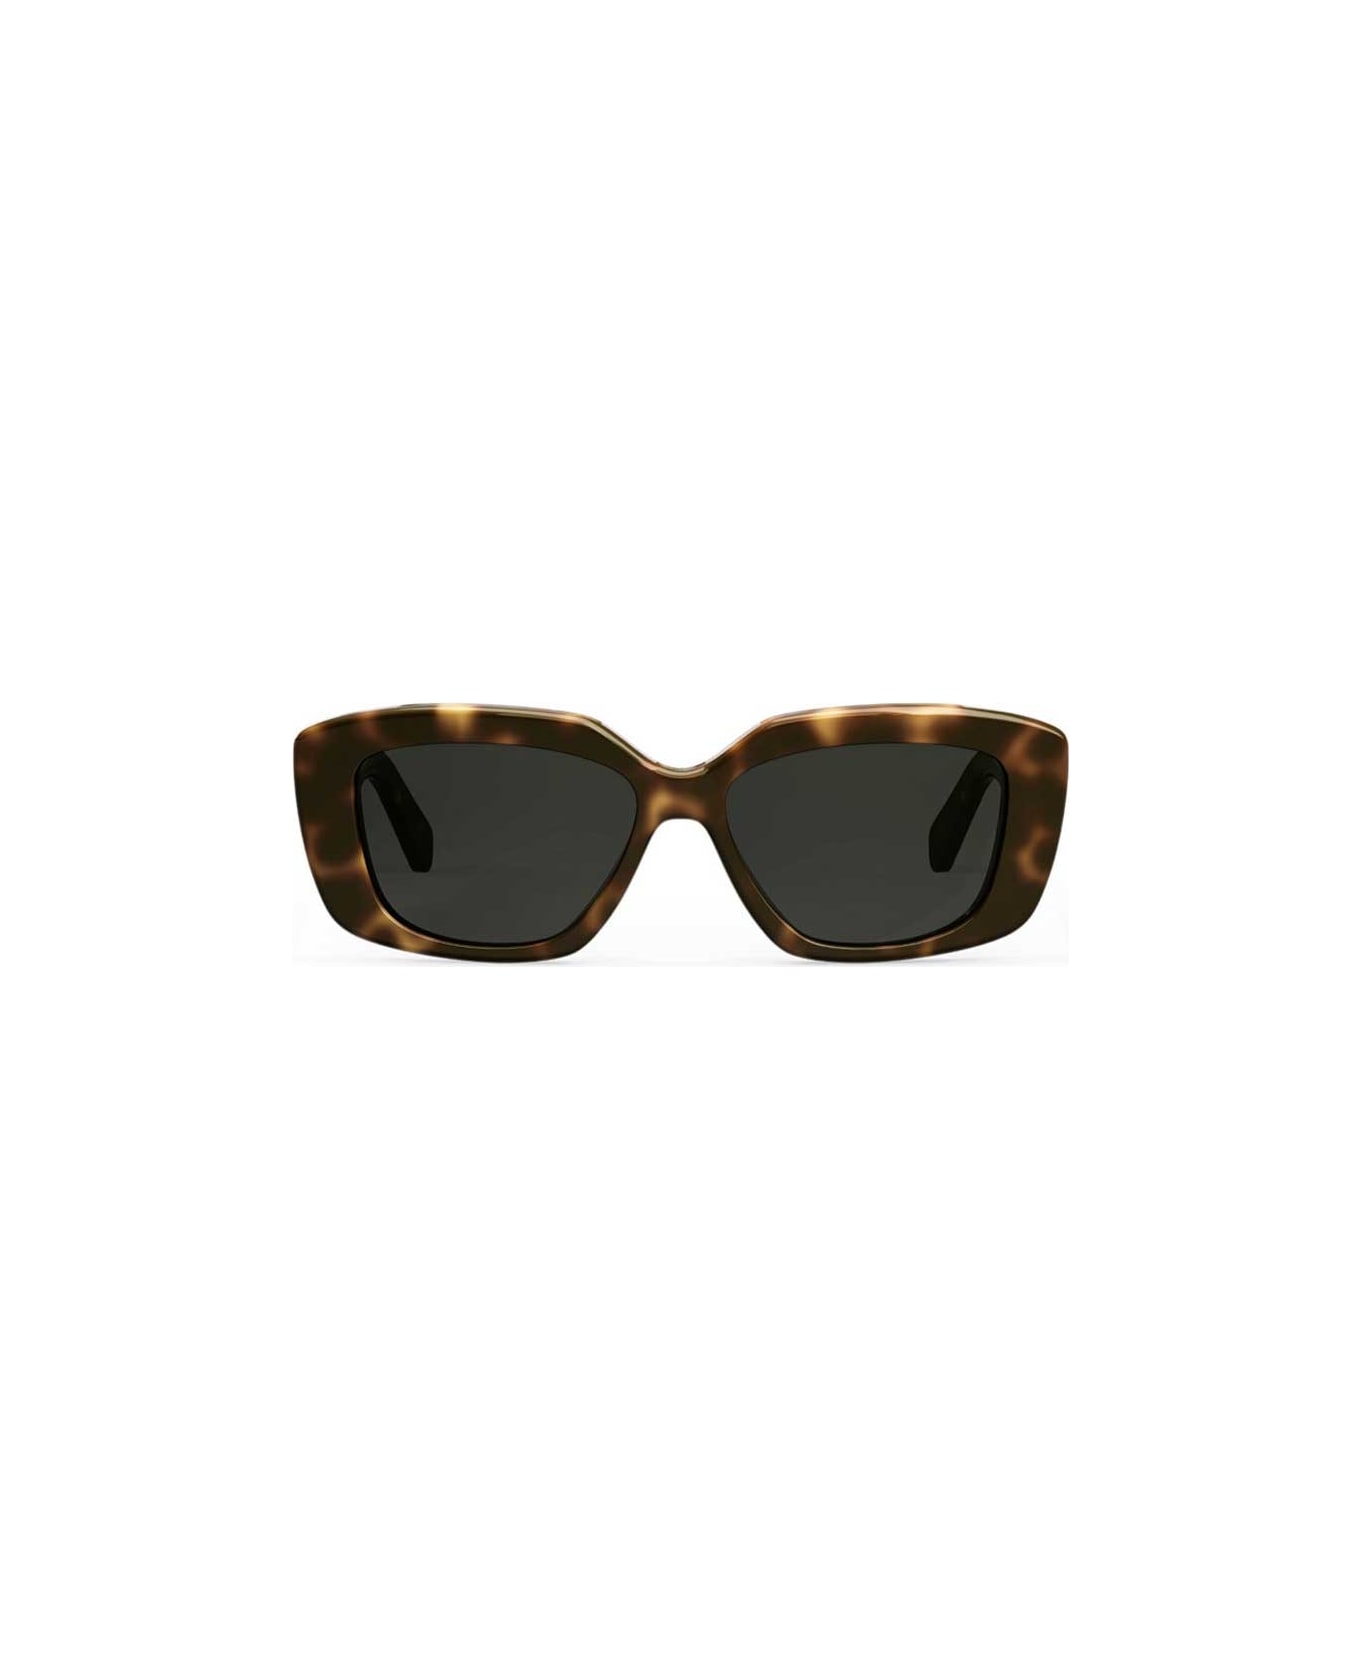 Celine Rectangle Sunglasses - Marrone/Grigio